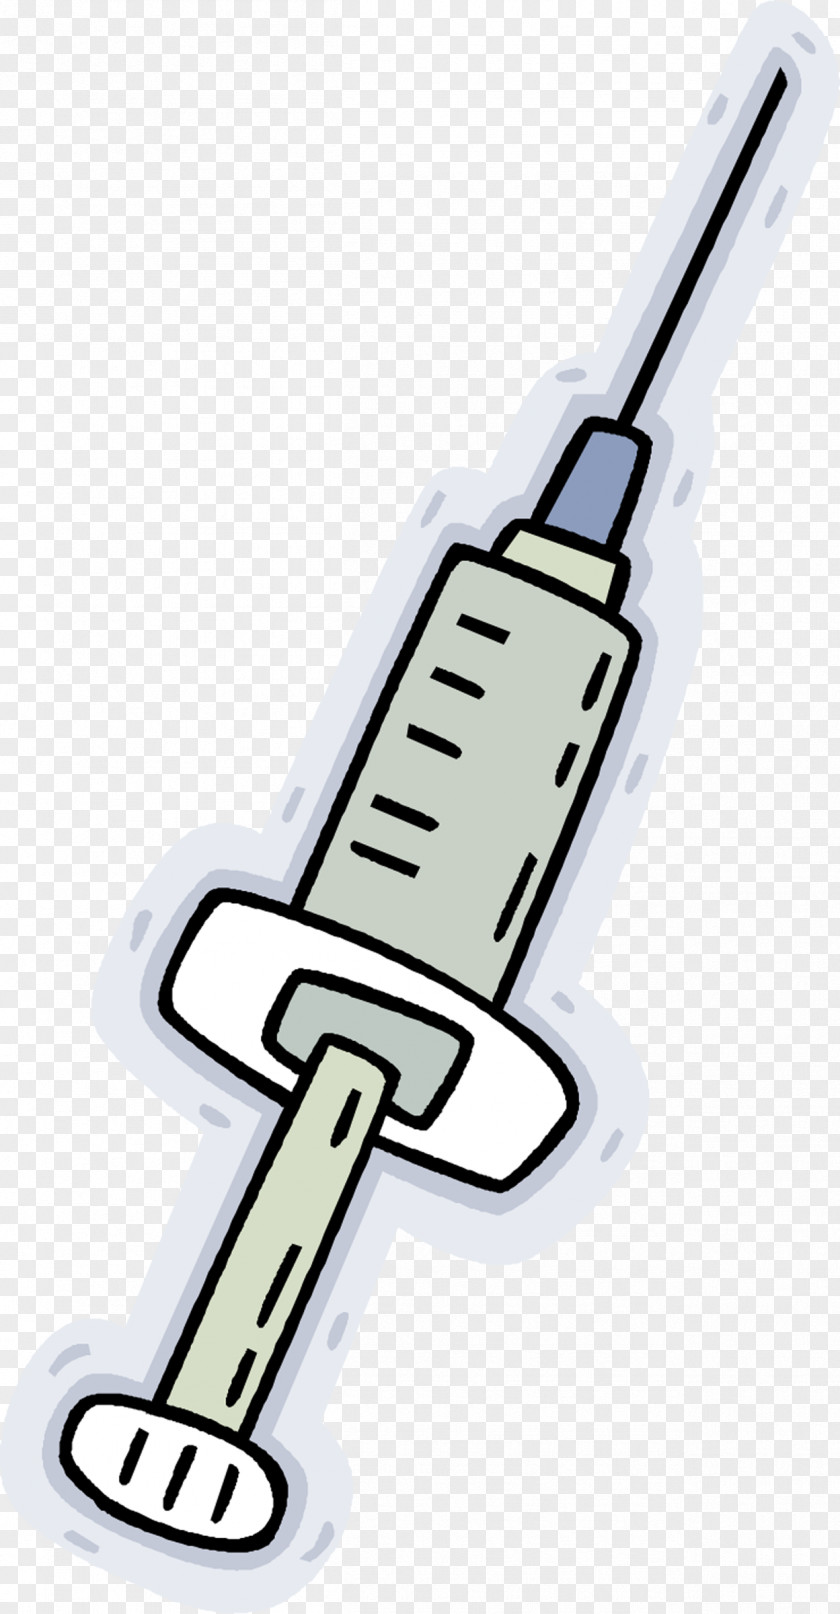 Syringe Hypodermic Needle Injection Medicine Medical Equipment PNG